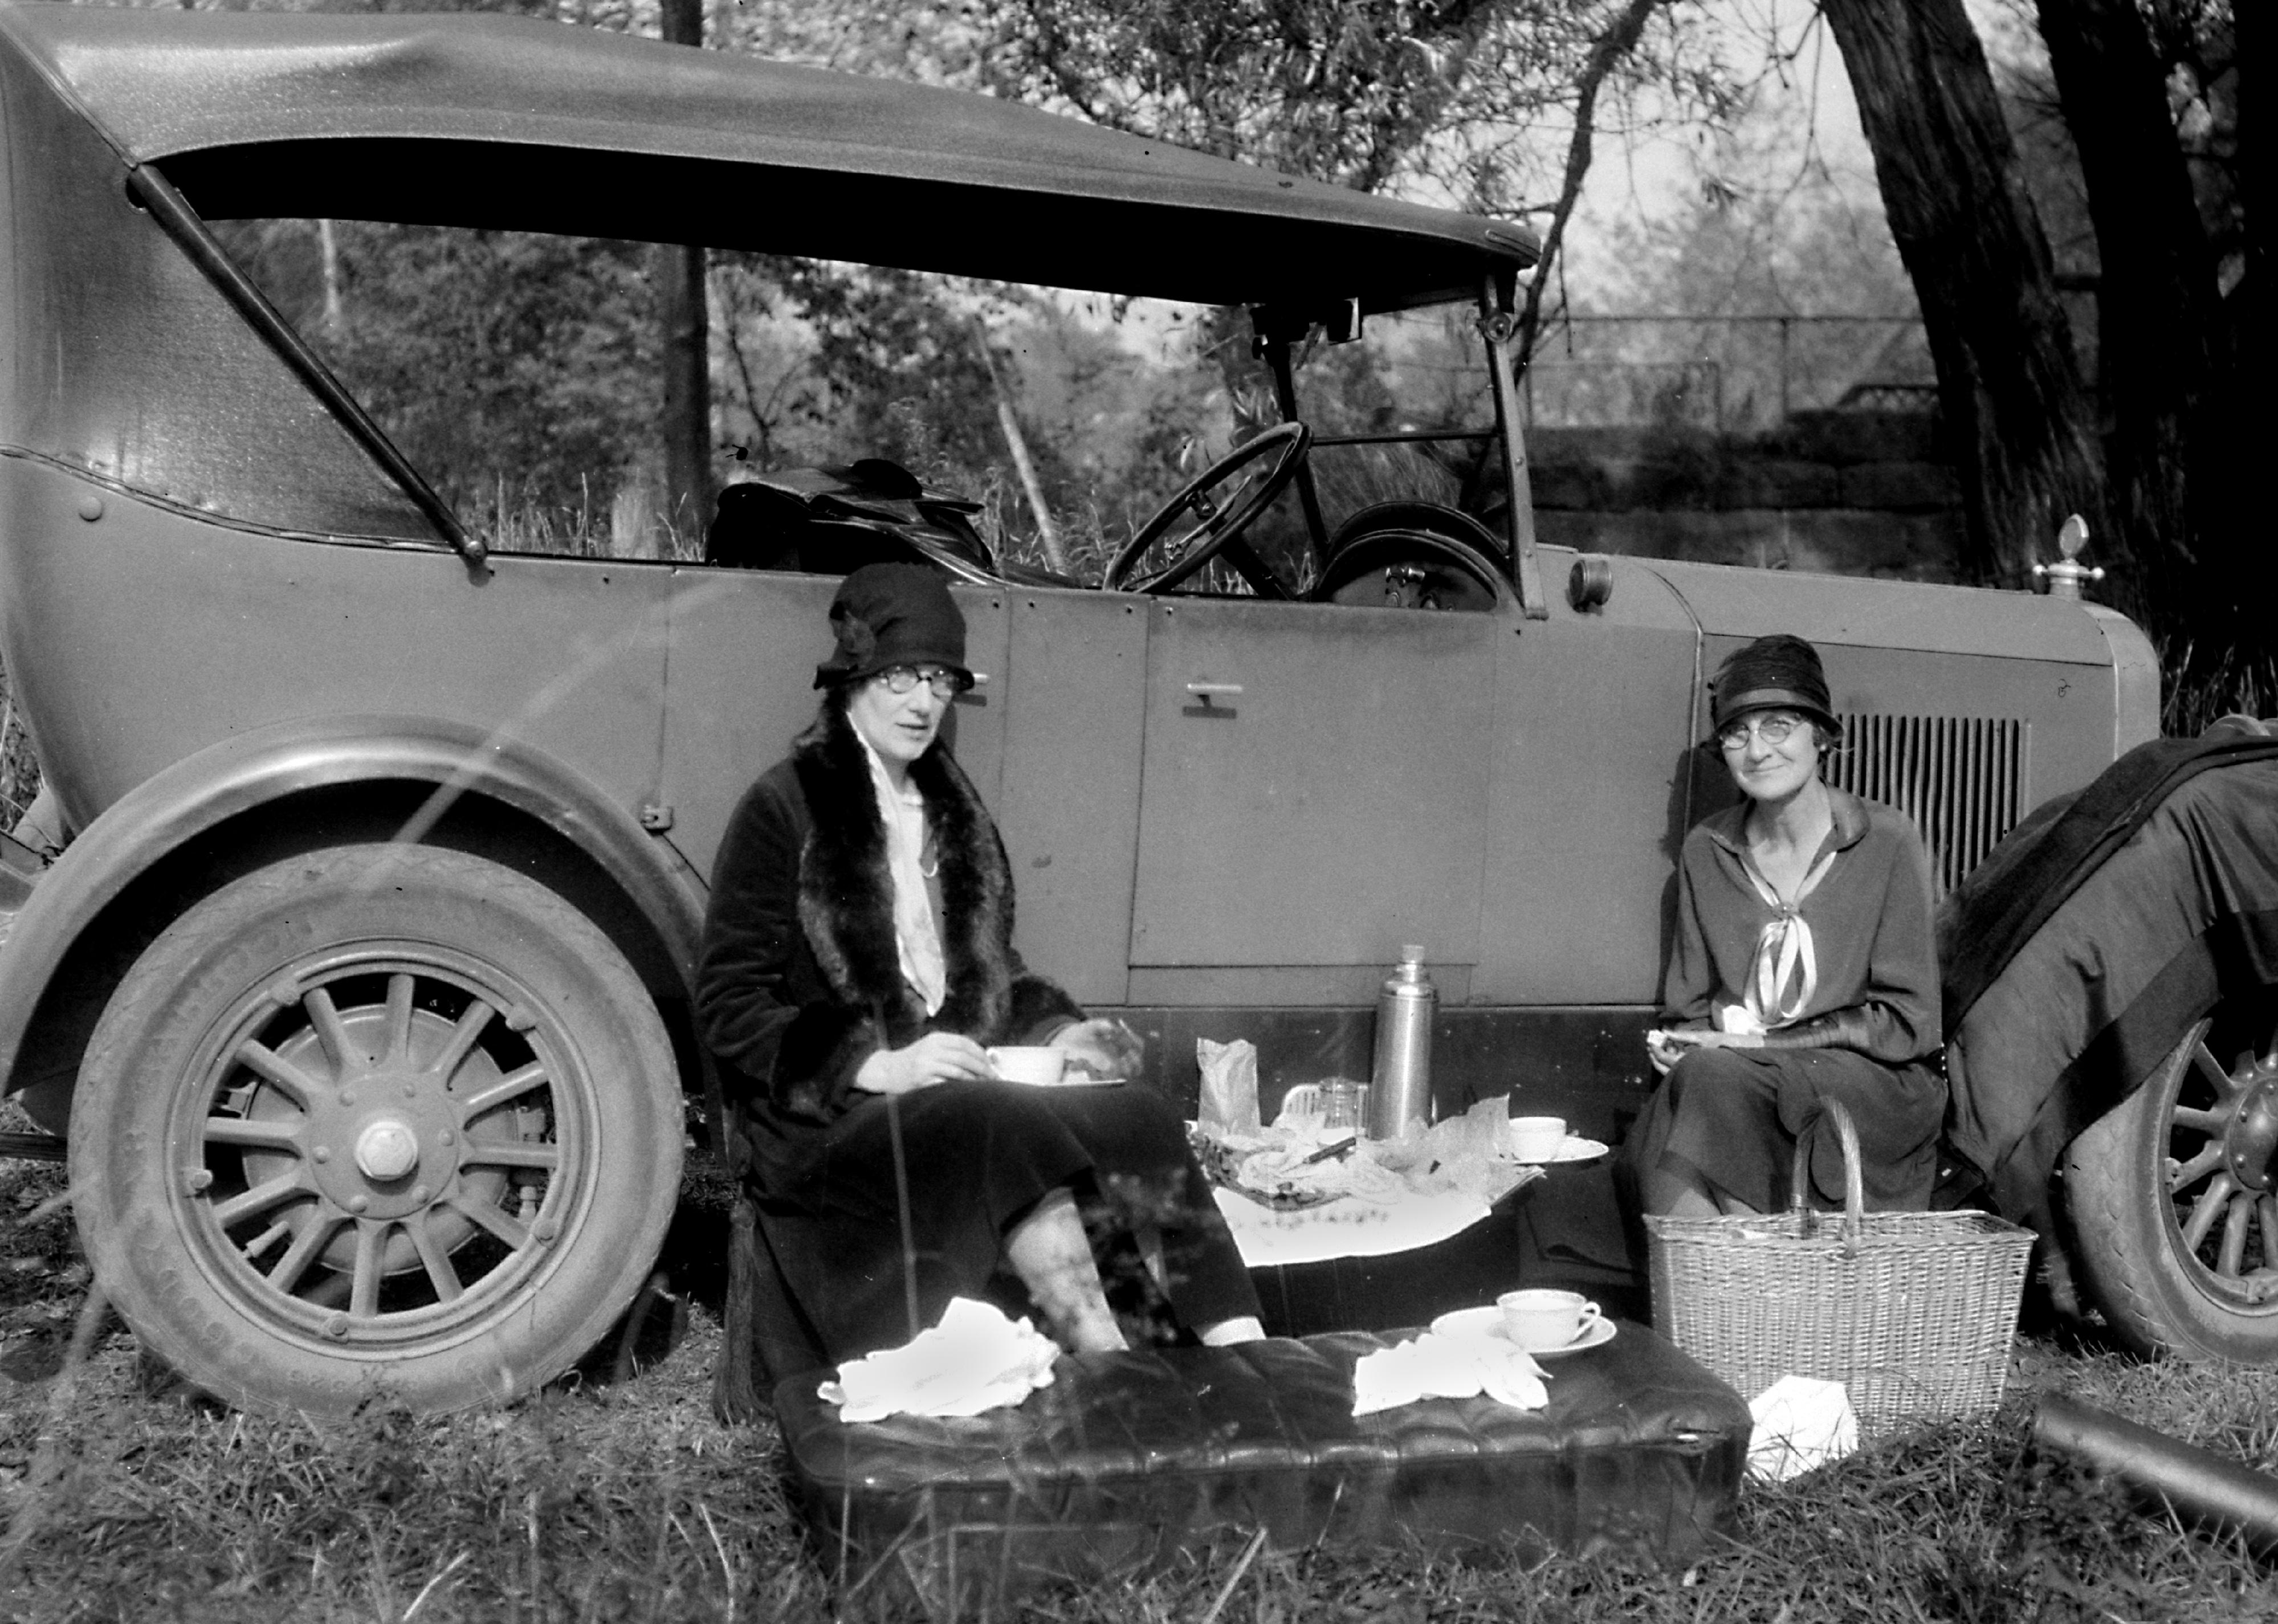 Roadside picnic along the car, circa 1920.